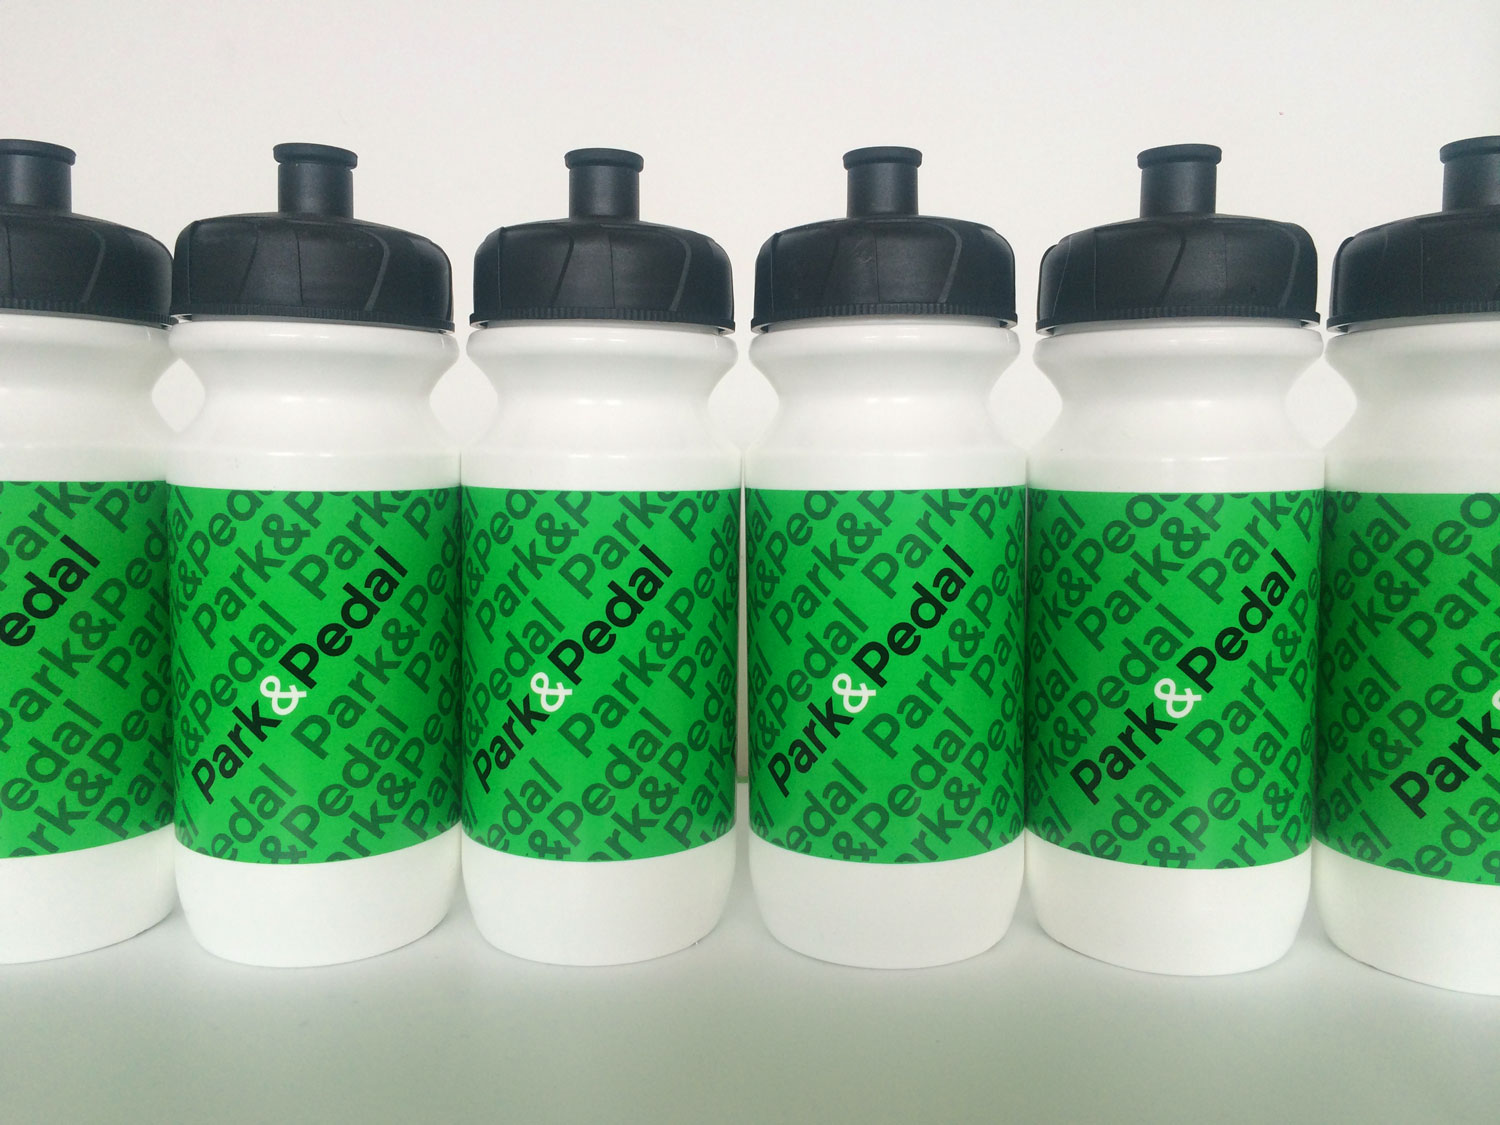 NEW: Park&Pedal Water Bottles